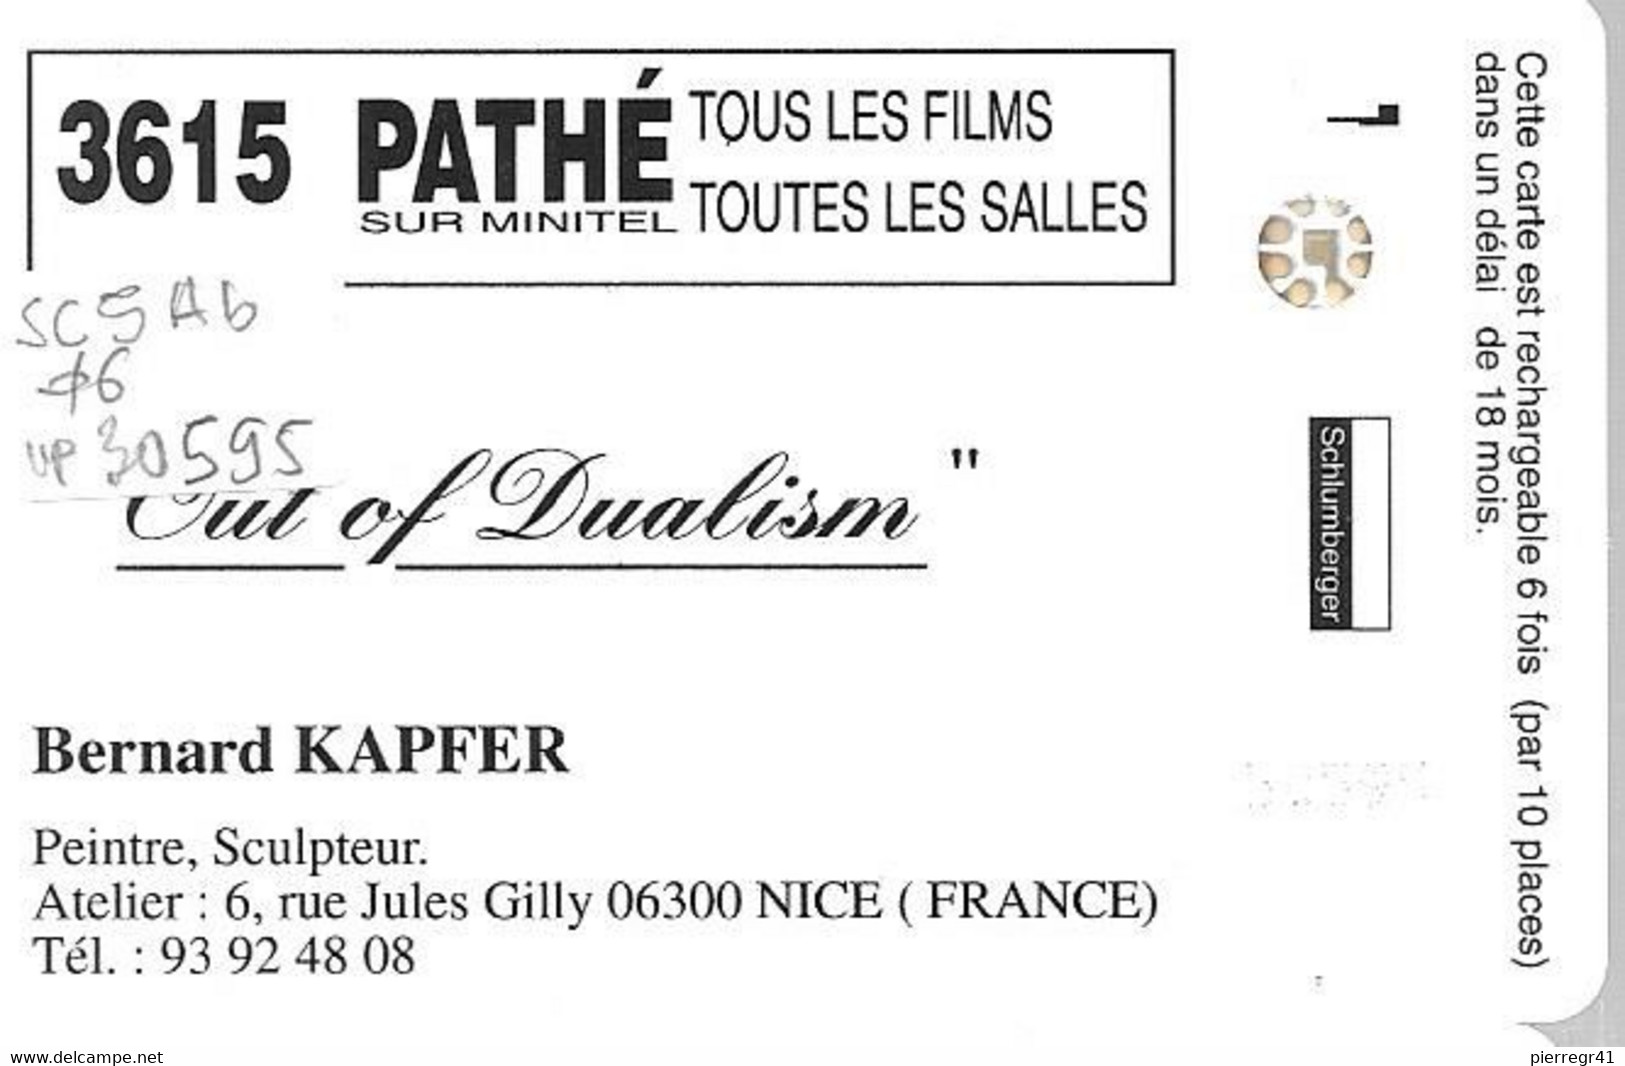 CARTE-FR- CINEMA-PATHE-SC5Ab-N° Impact 30595-KAPFER N°4-Tirage 650Ex-R°/V° Glacé-NEUVE-LUXE/RARE - Movie Cards